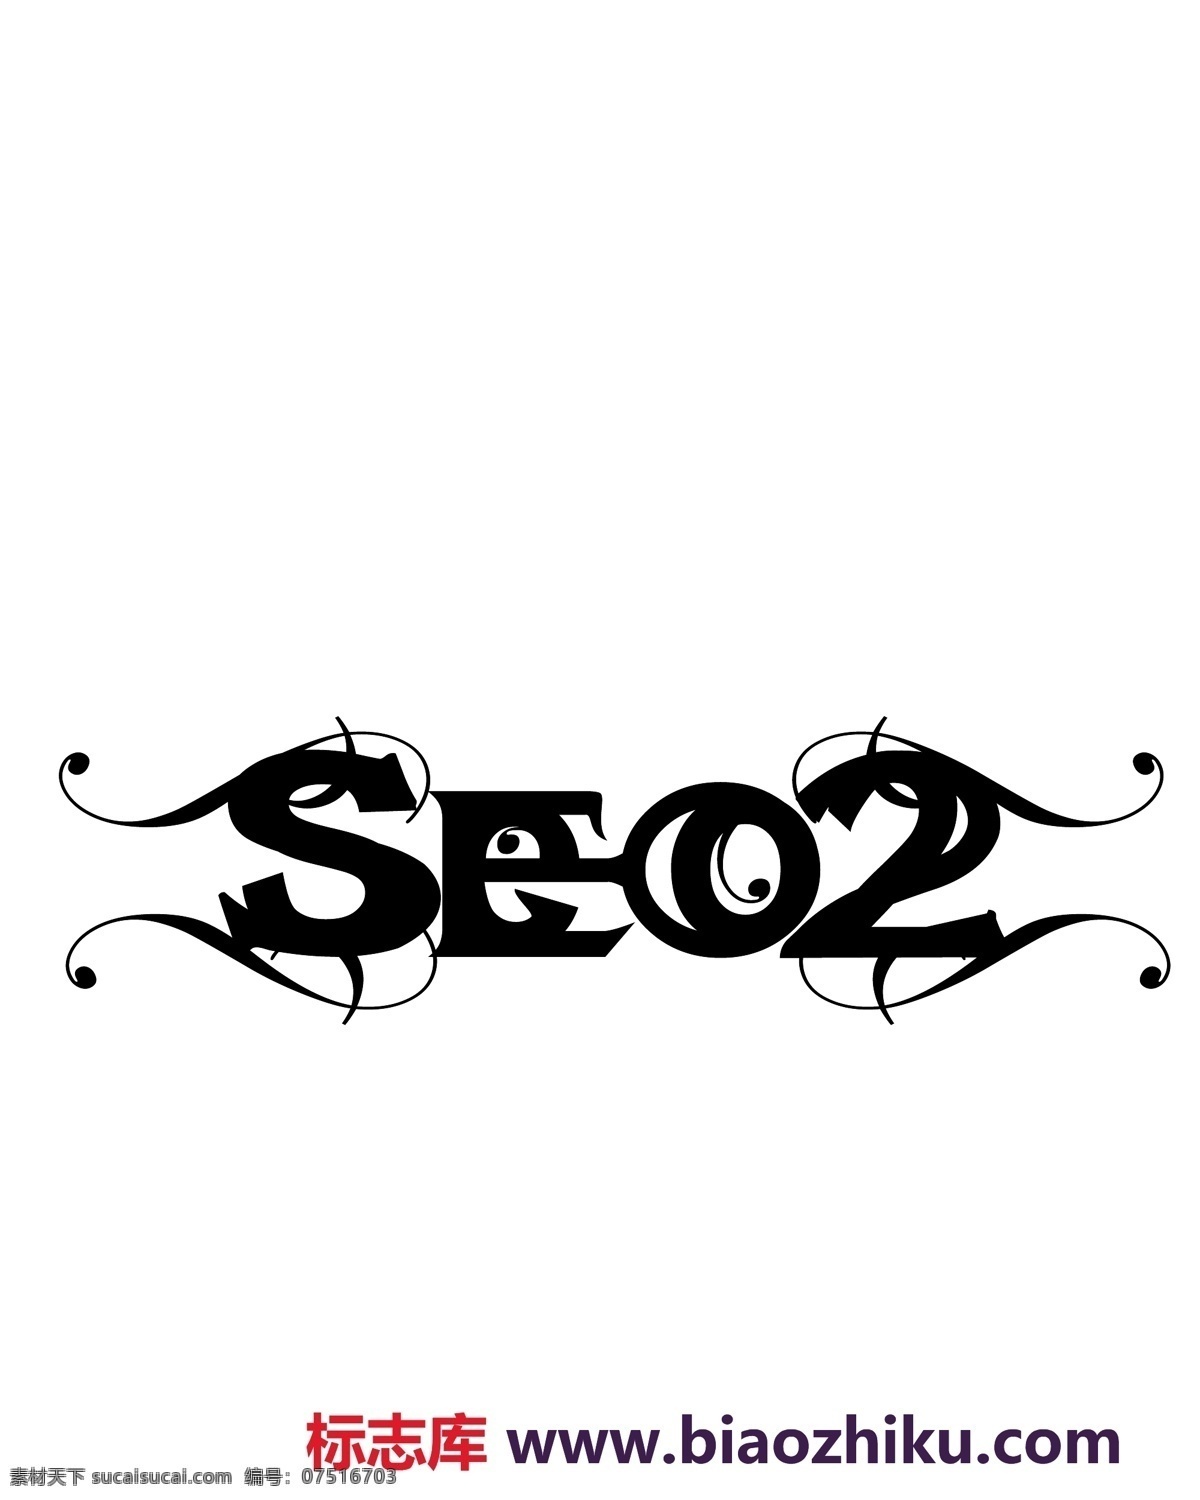 seo2 logo大全 logo 设计欣赏 商业矢量 矢量下载 唱片公司 标志设计 欣赏 网页矢量 矢量图 其他矢量图